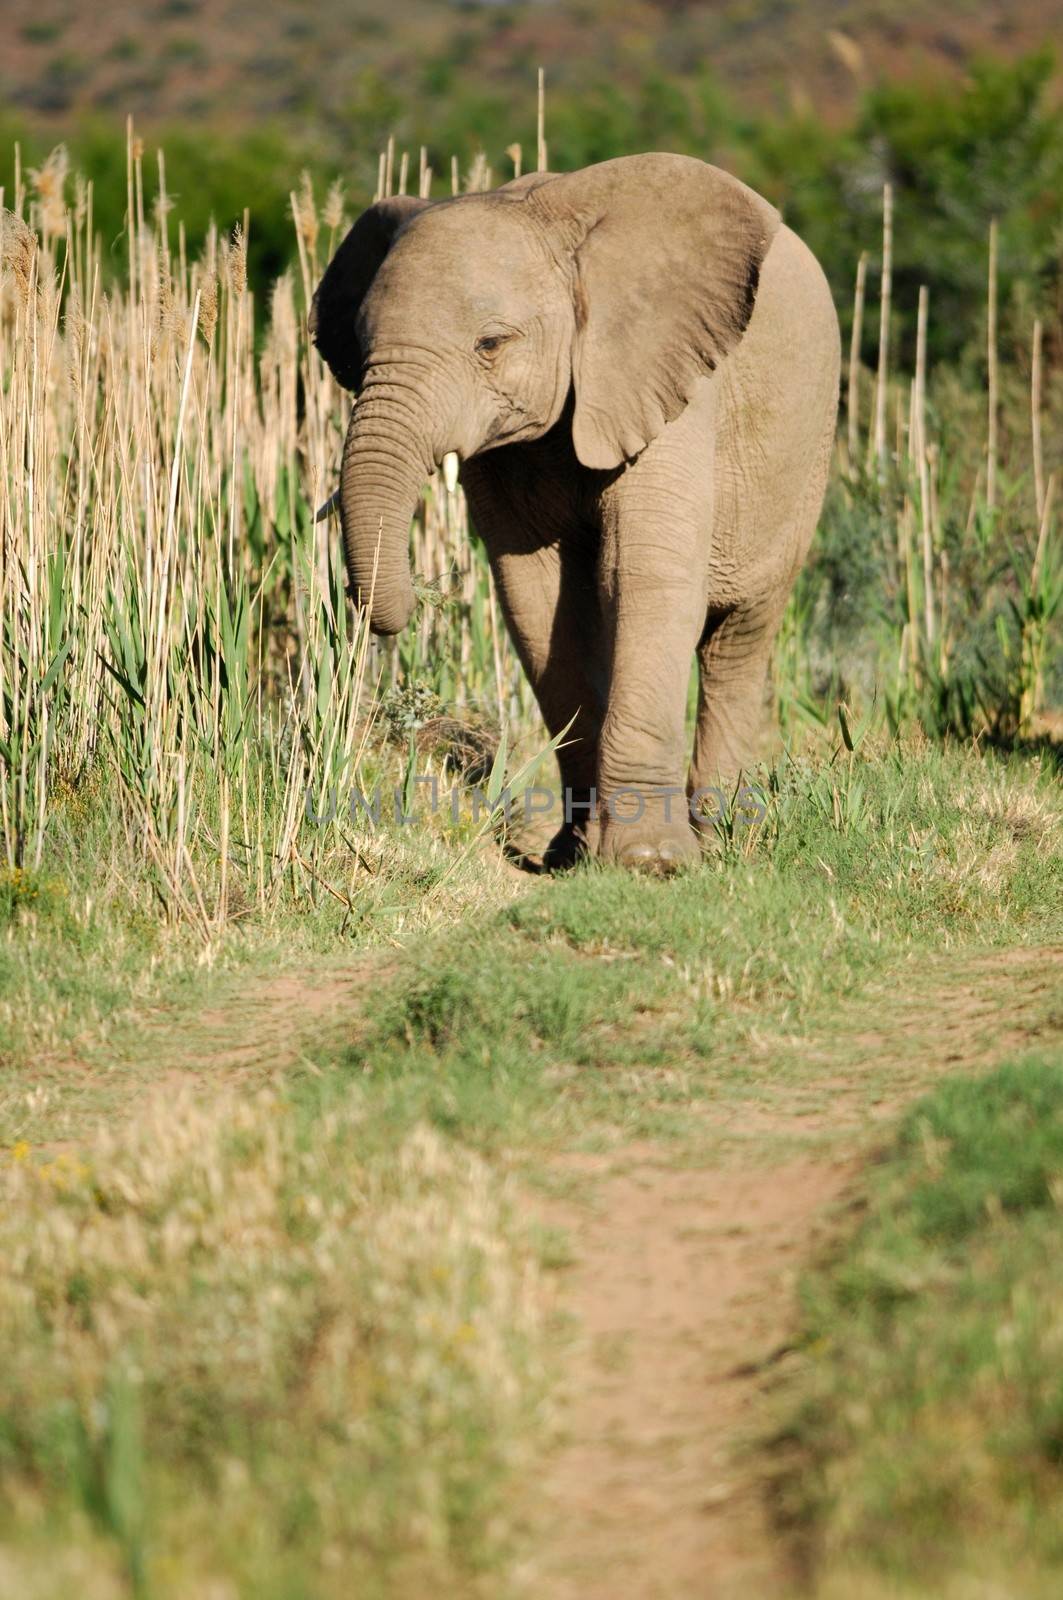 A shot of an Elephant while on safari